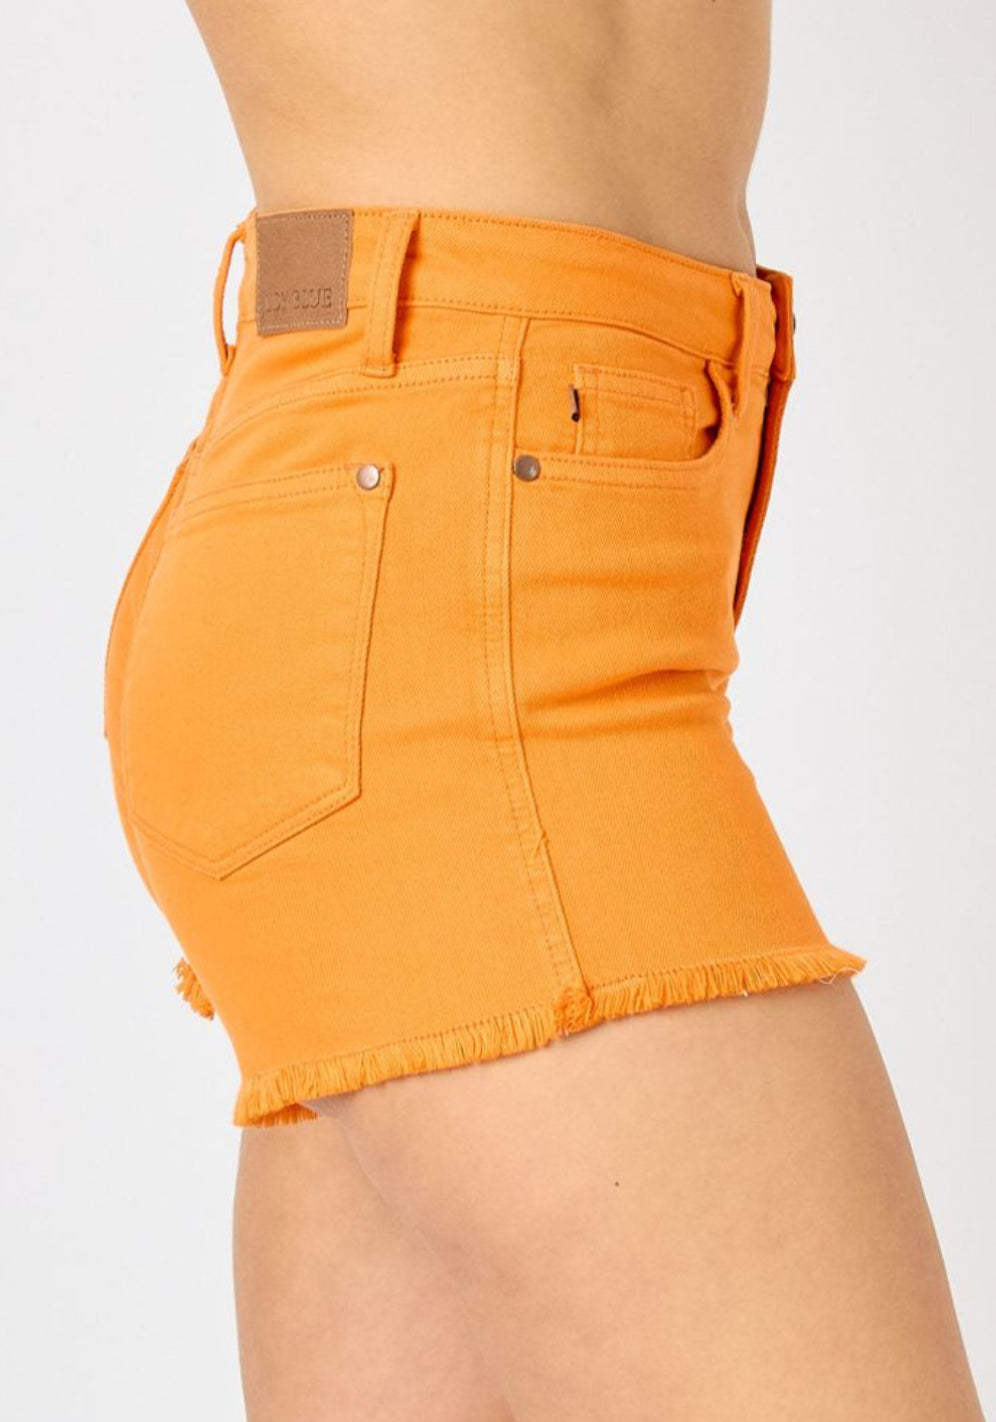 Judy Blue Orange Fray Hem Shorts